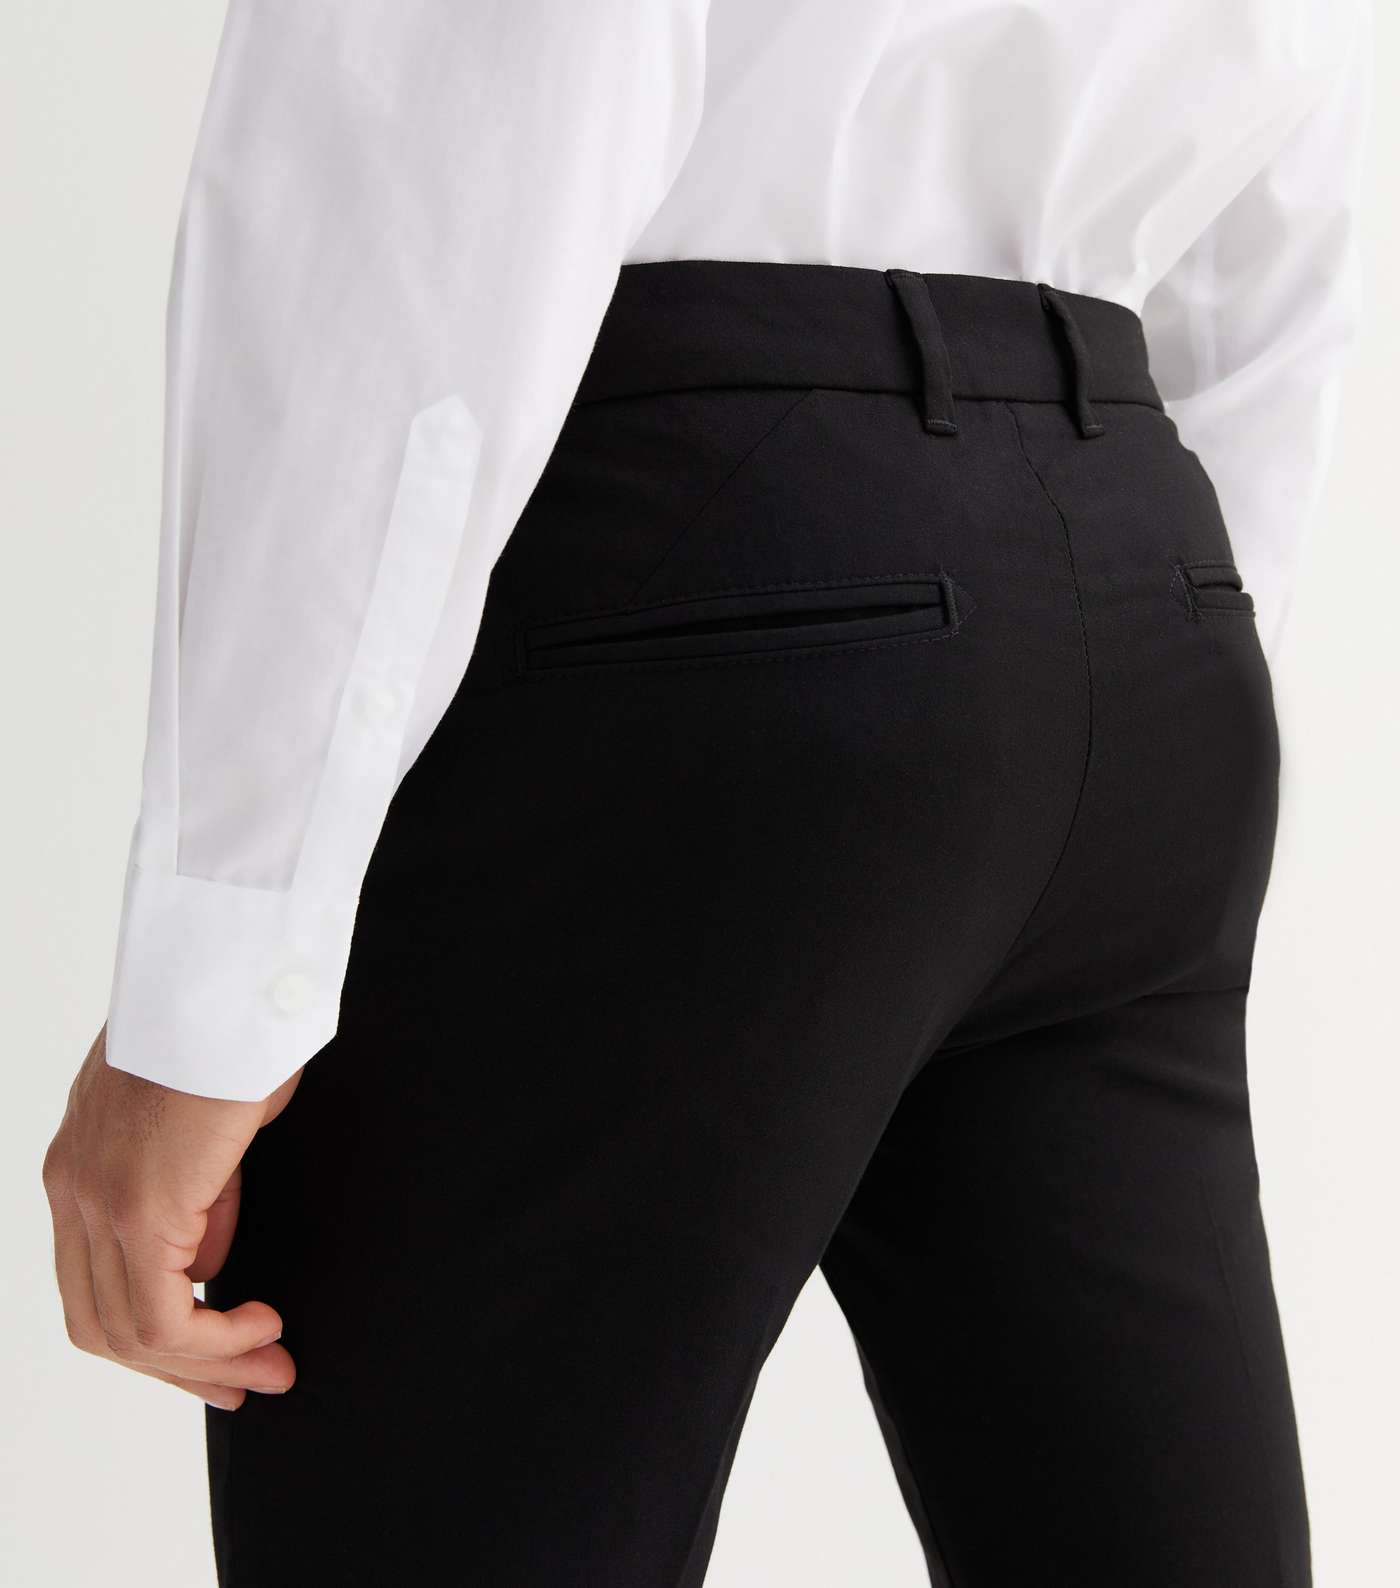 Black Skinny Suit Trousers Image 2